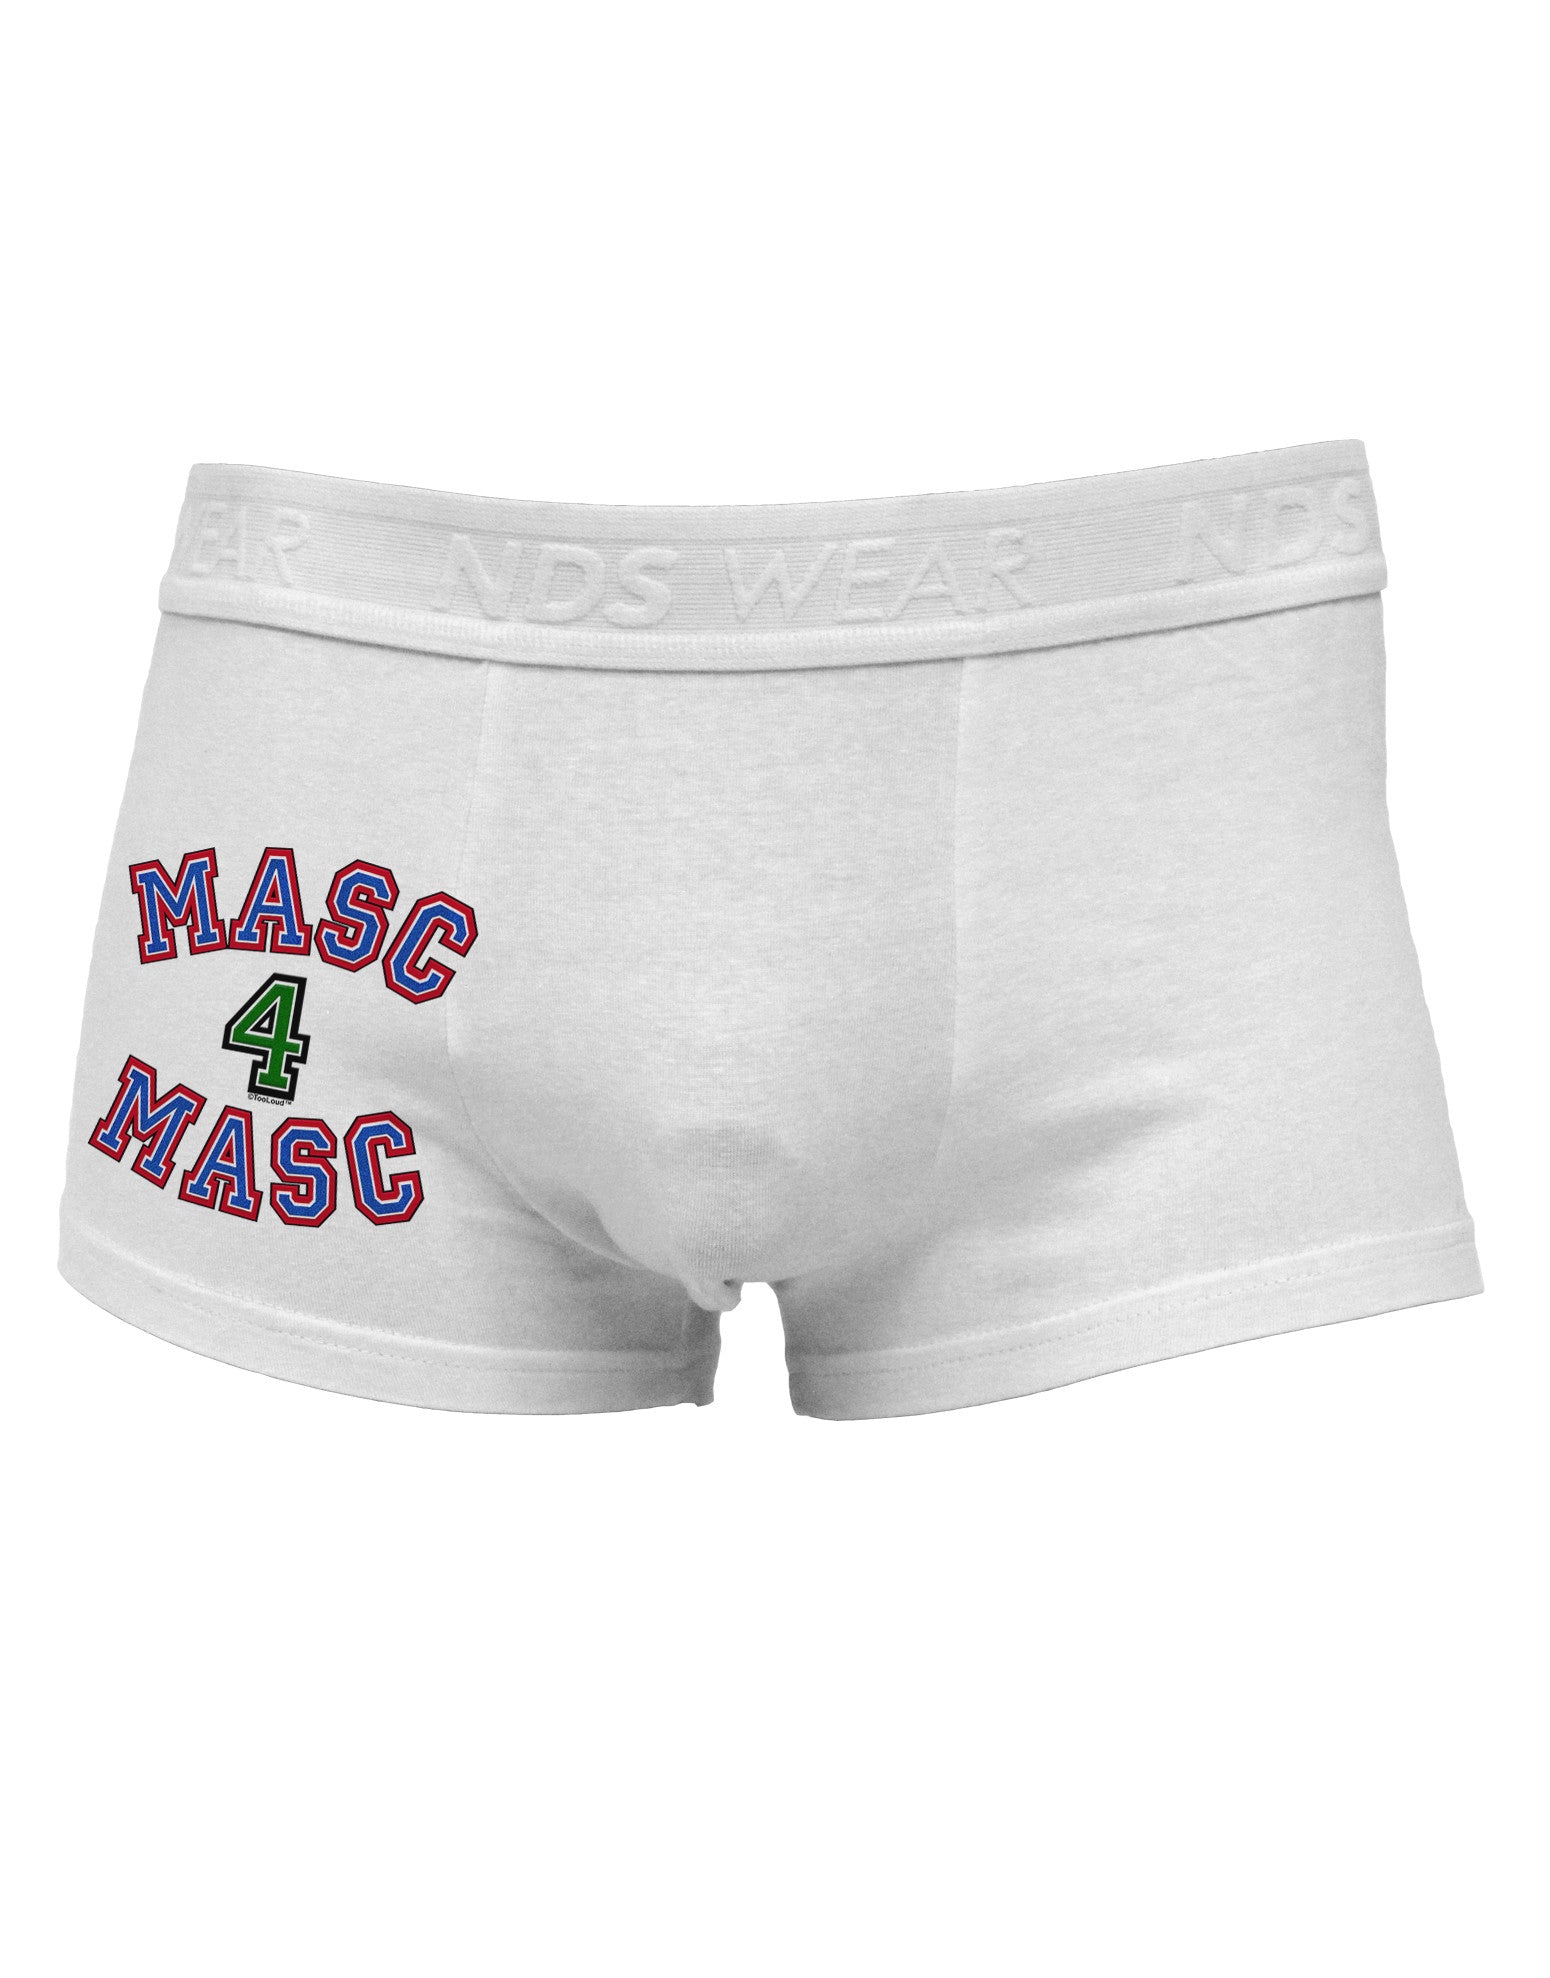 Masc 4 Masc College Stud Side Printed Mens Trunk Underwear by NDS Wear